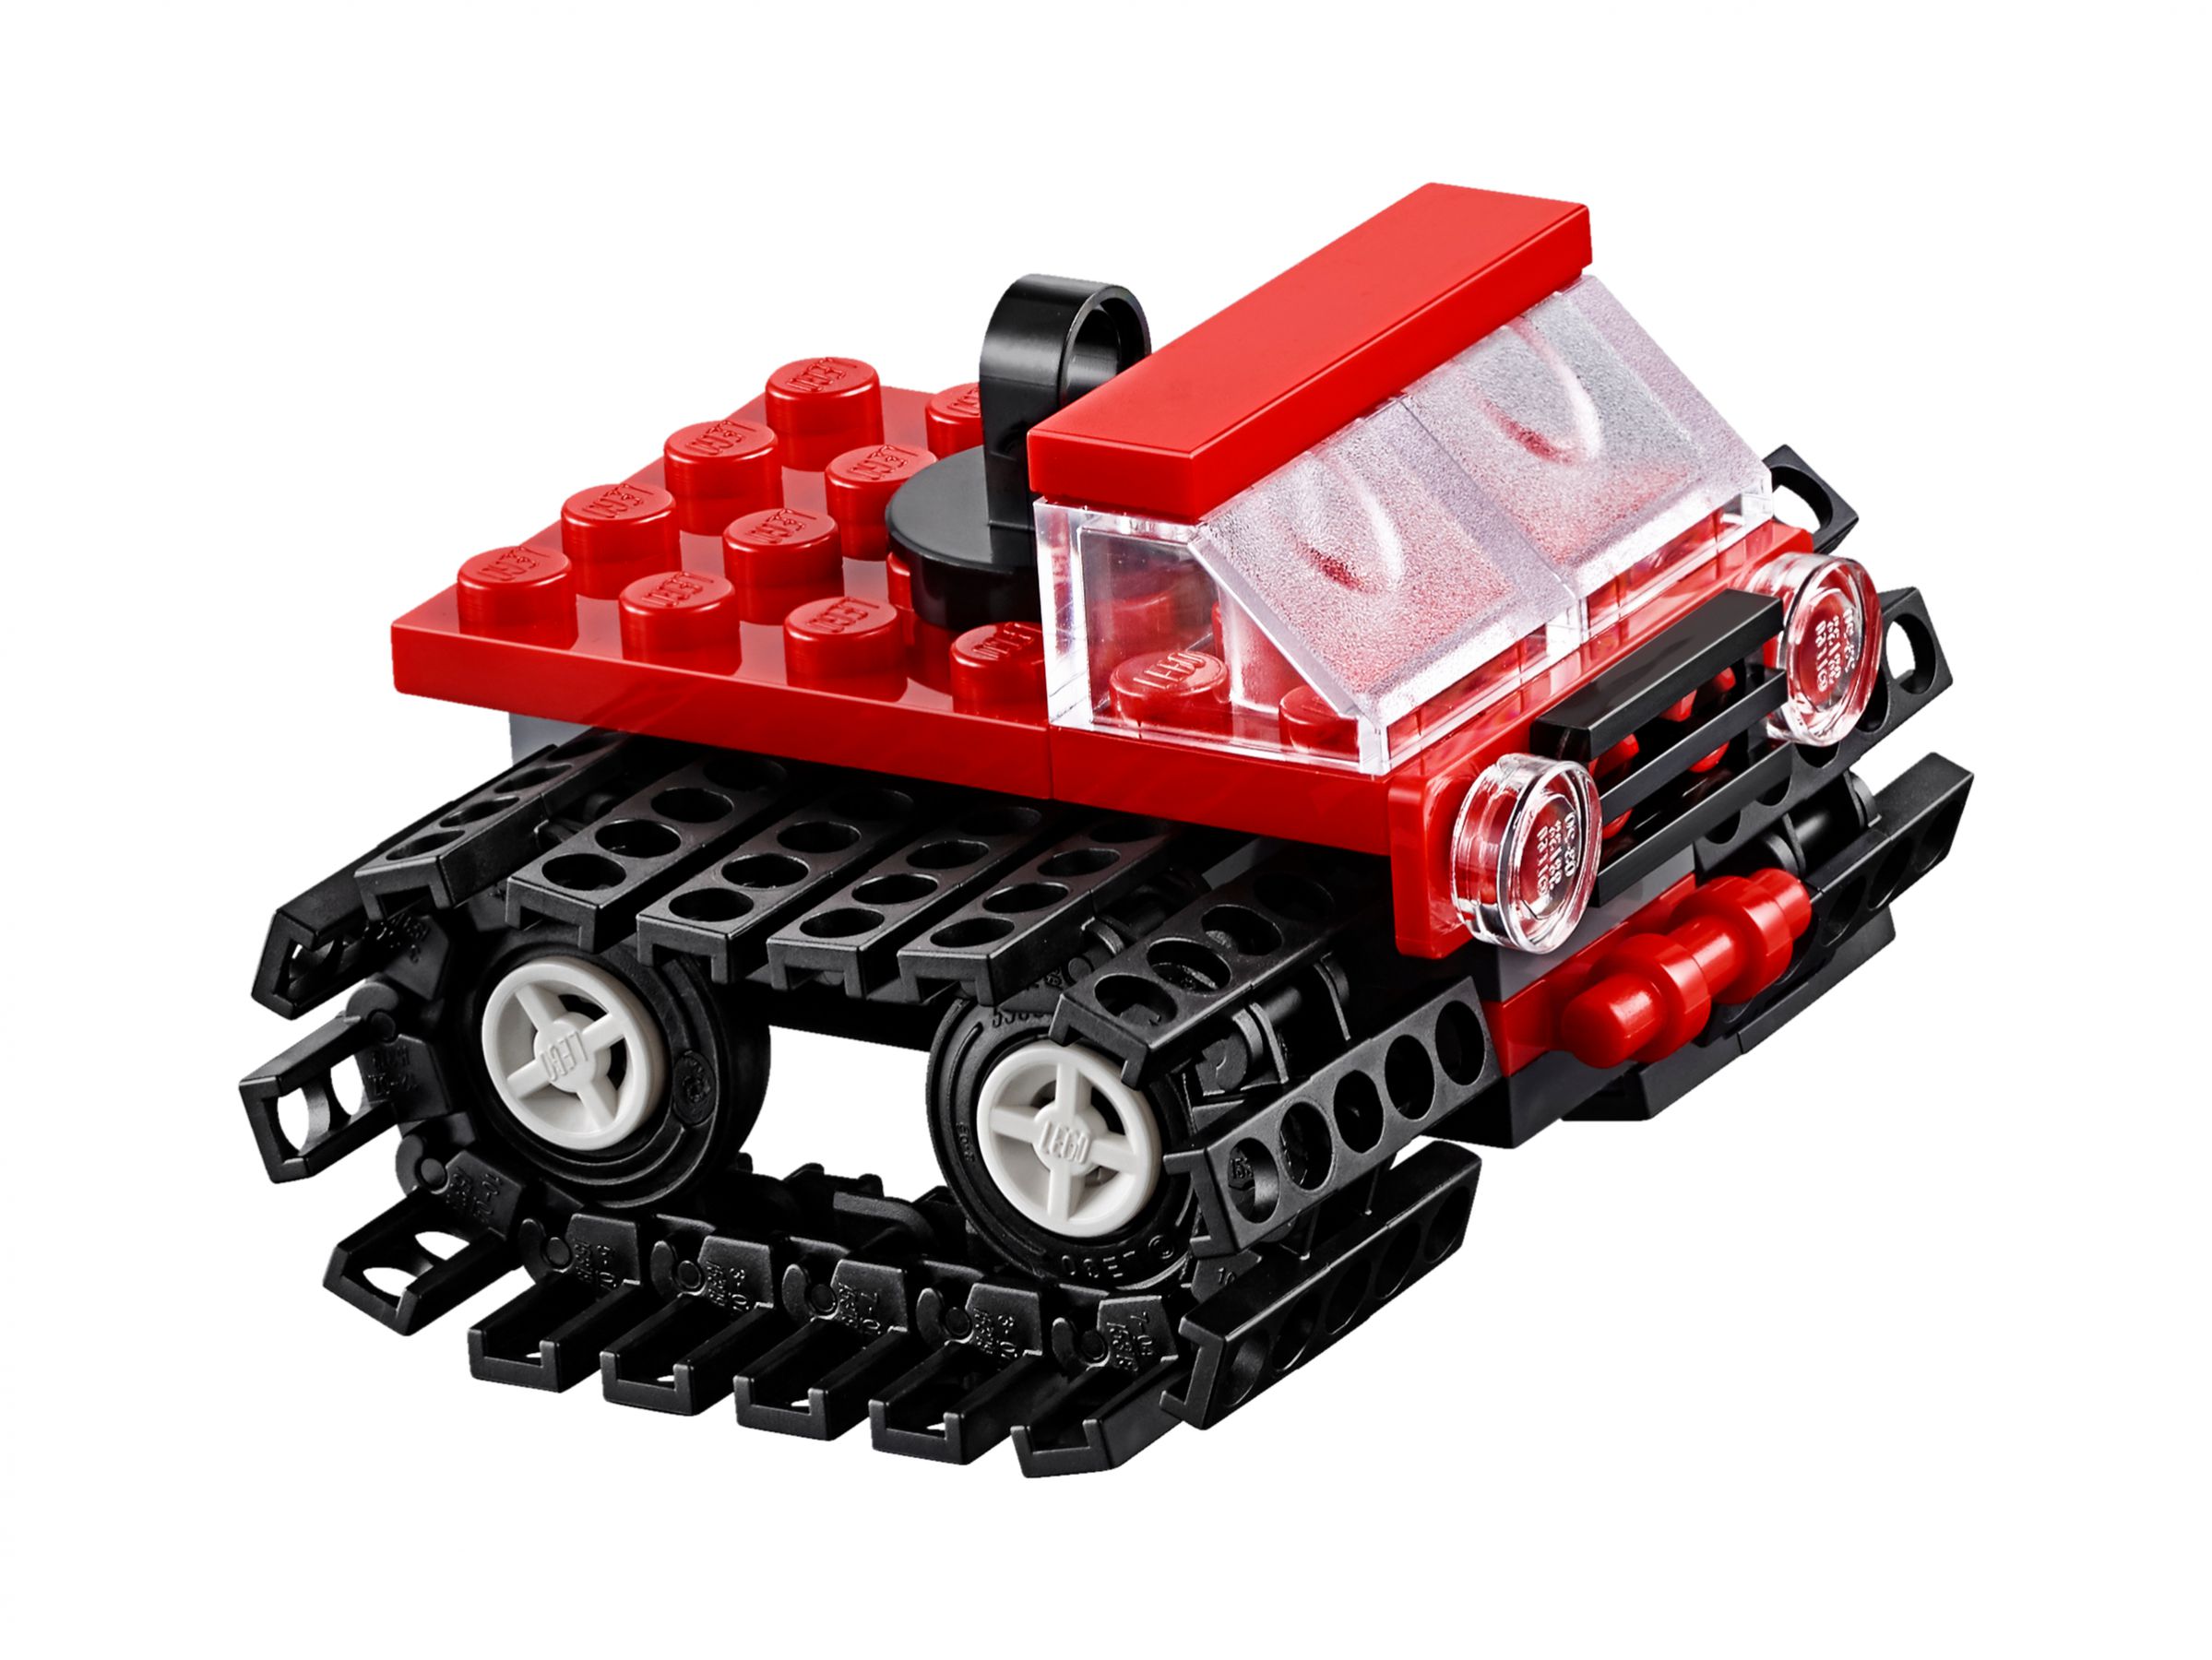 LEGO Creator 31049 Doppelrotor-Hubschrauber LEGO_31049_alt7.jpg